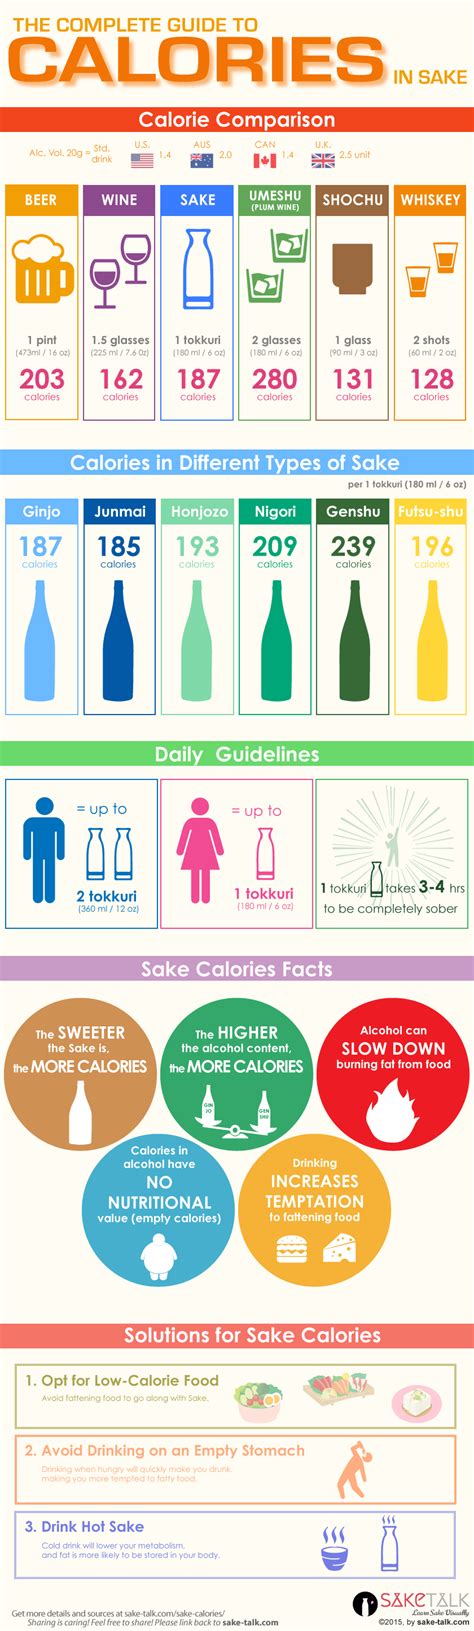 sake-calories-how-many-calories-are-in-sake image